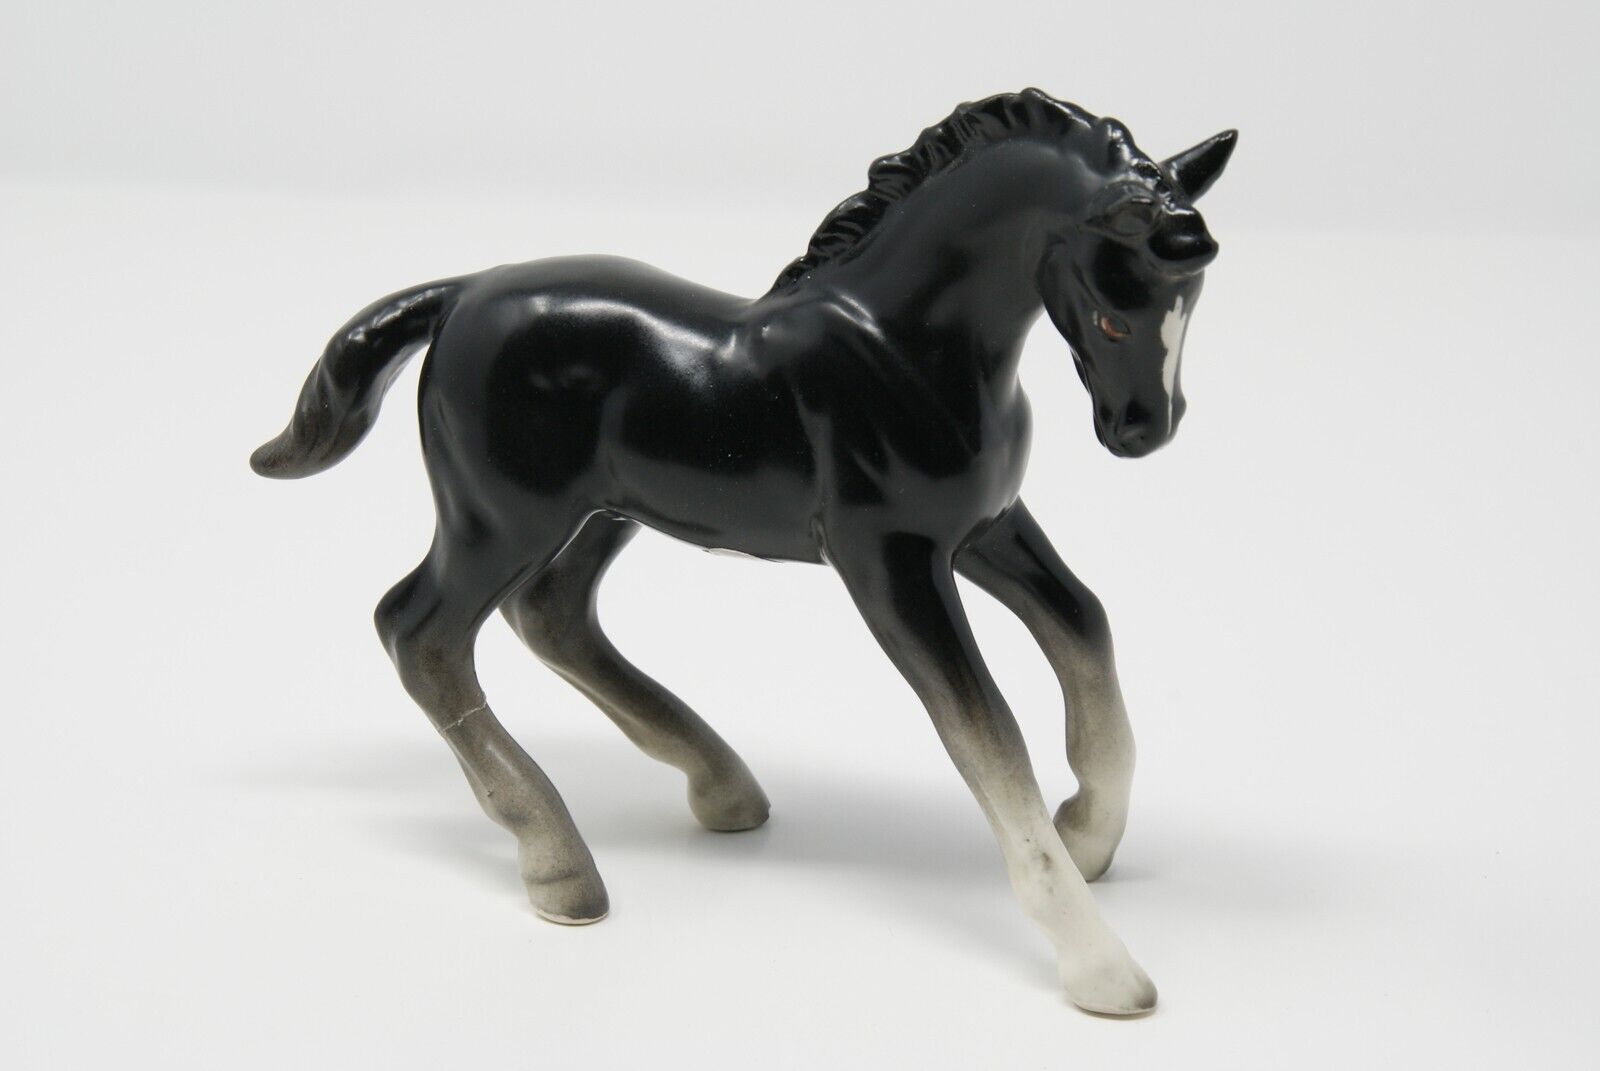 Vintage horse colt figurine Napco - white socks, blaze - Japan - mended